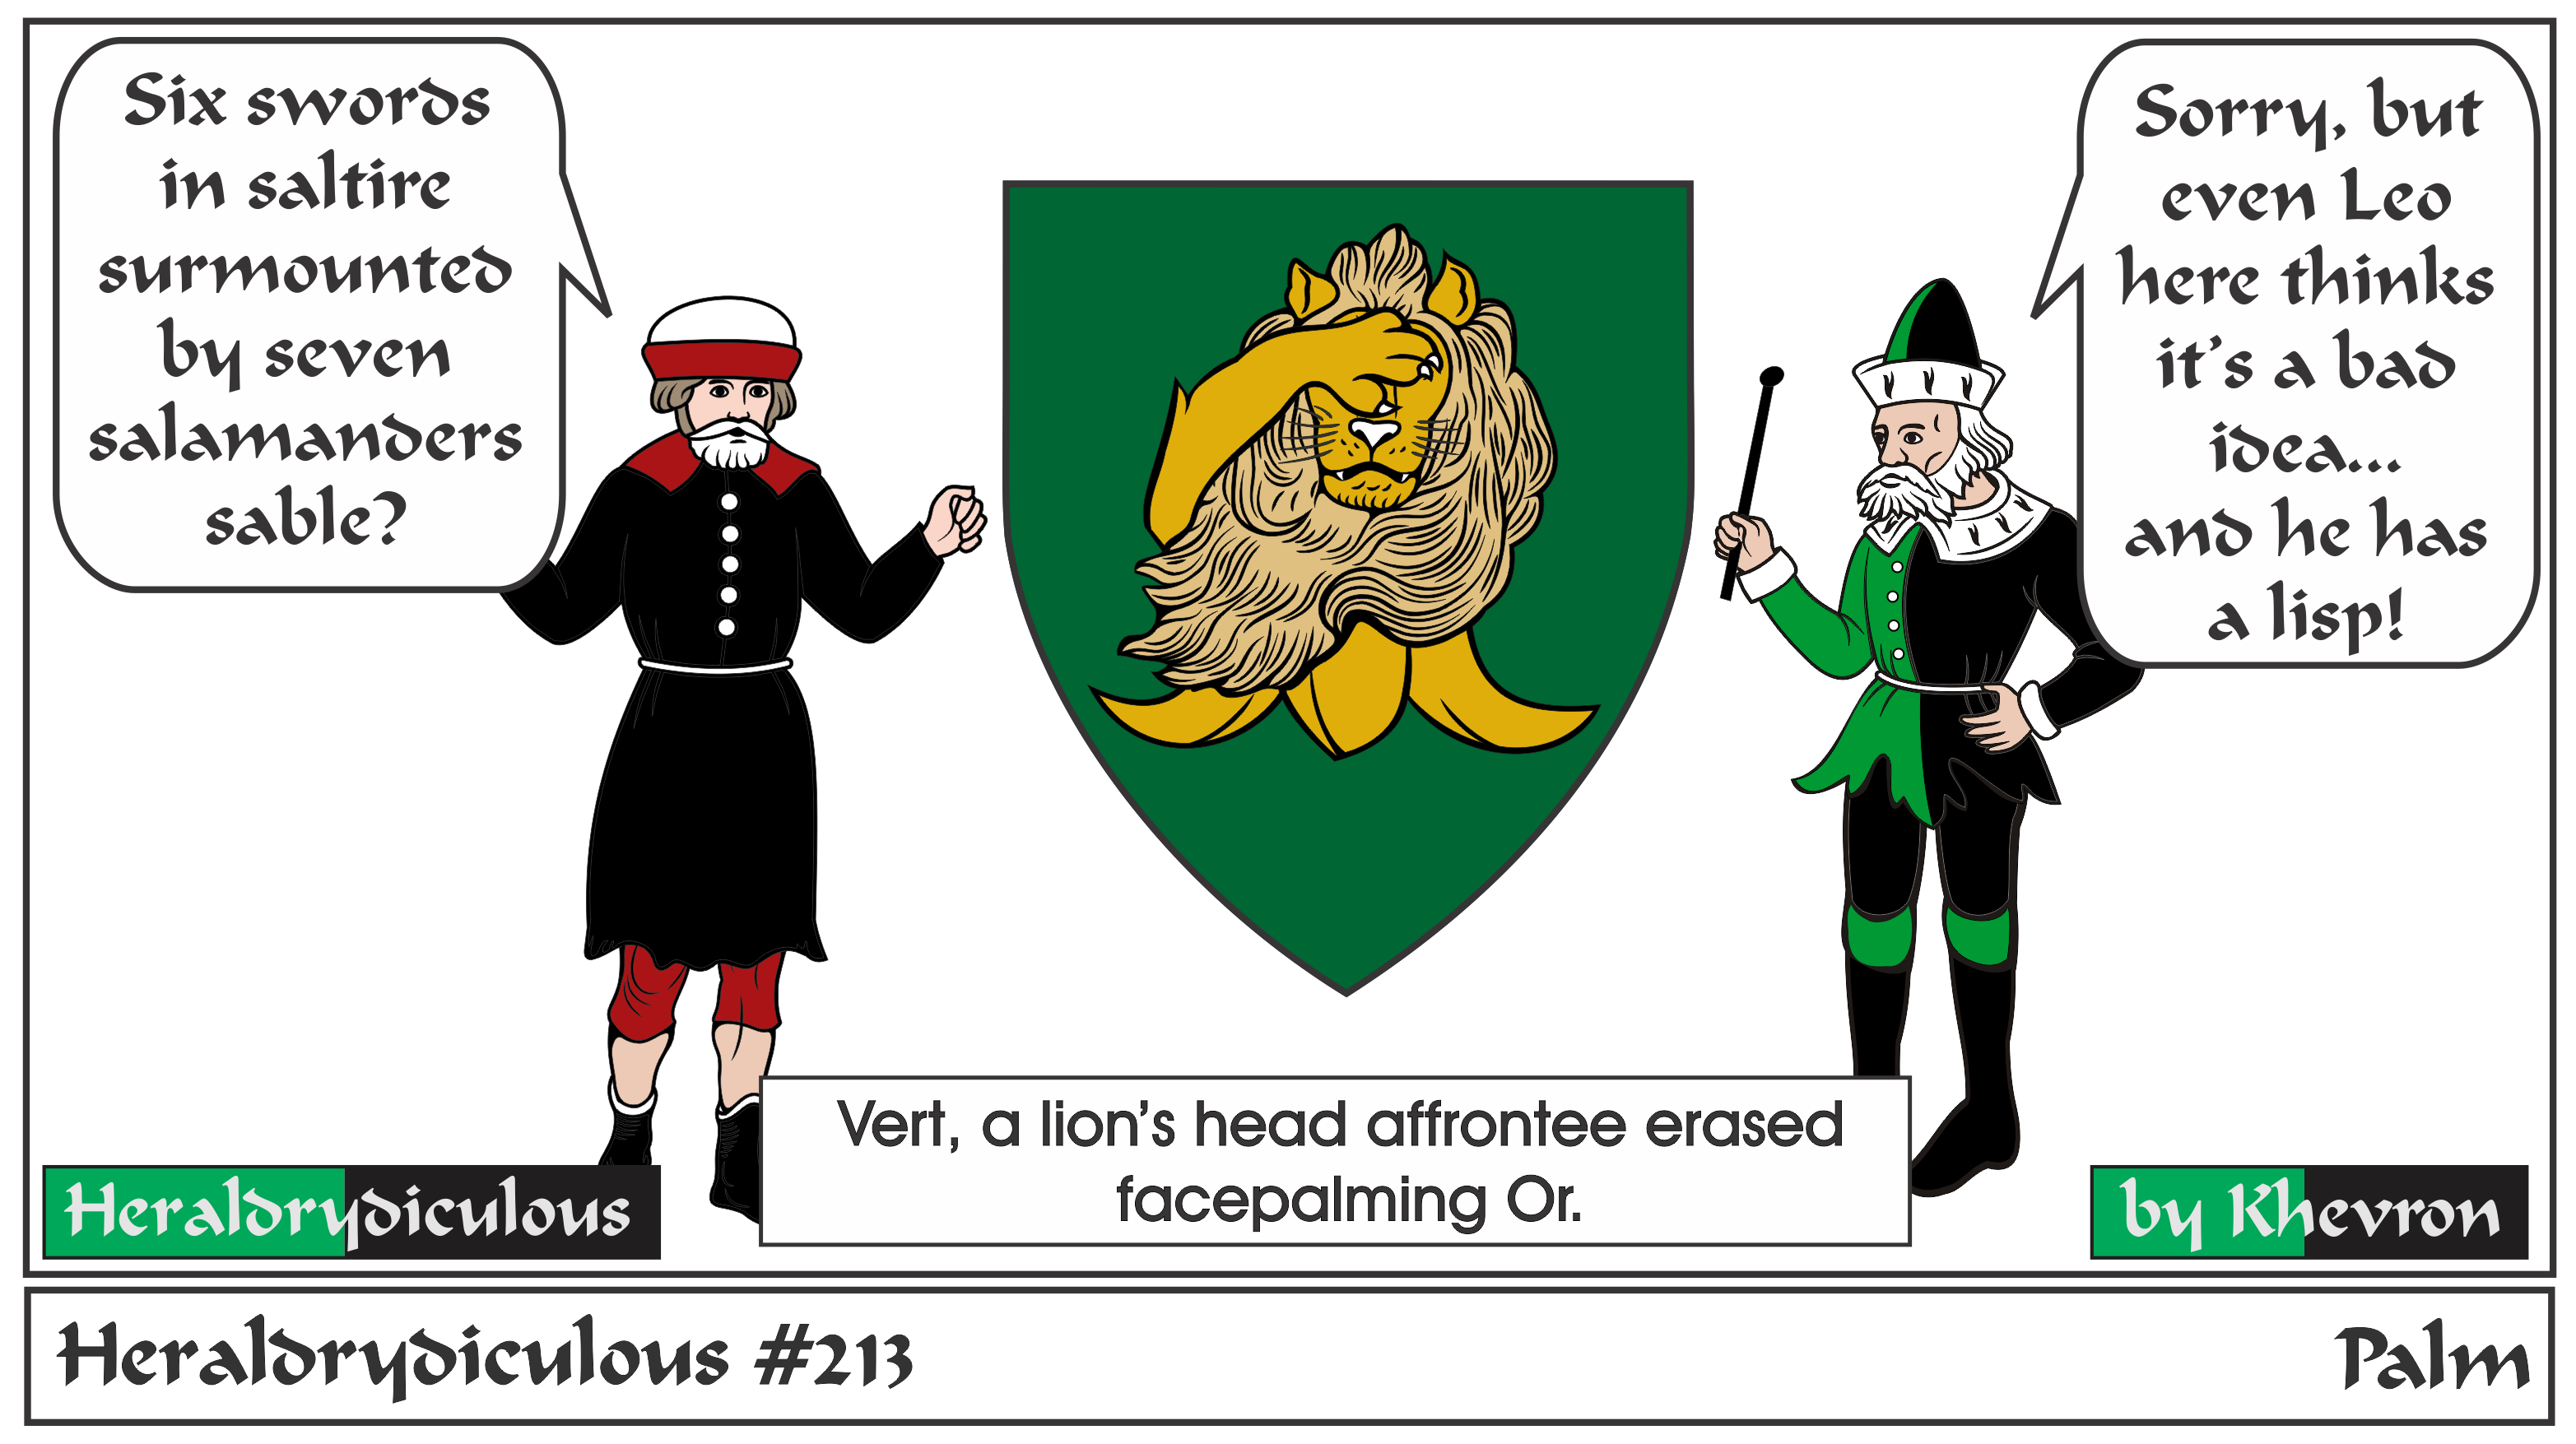 Heraldrydiculous #213